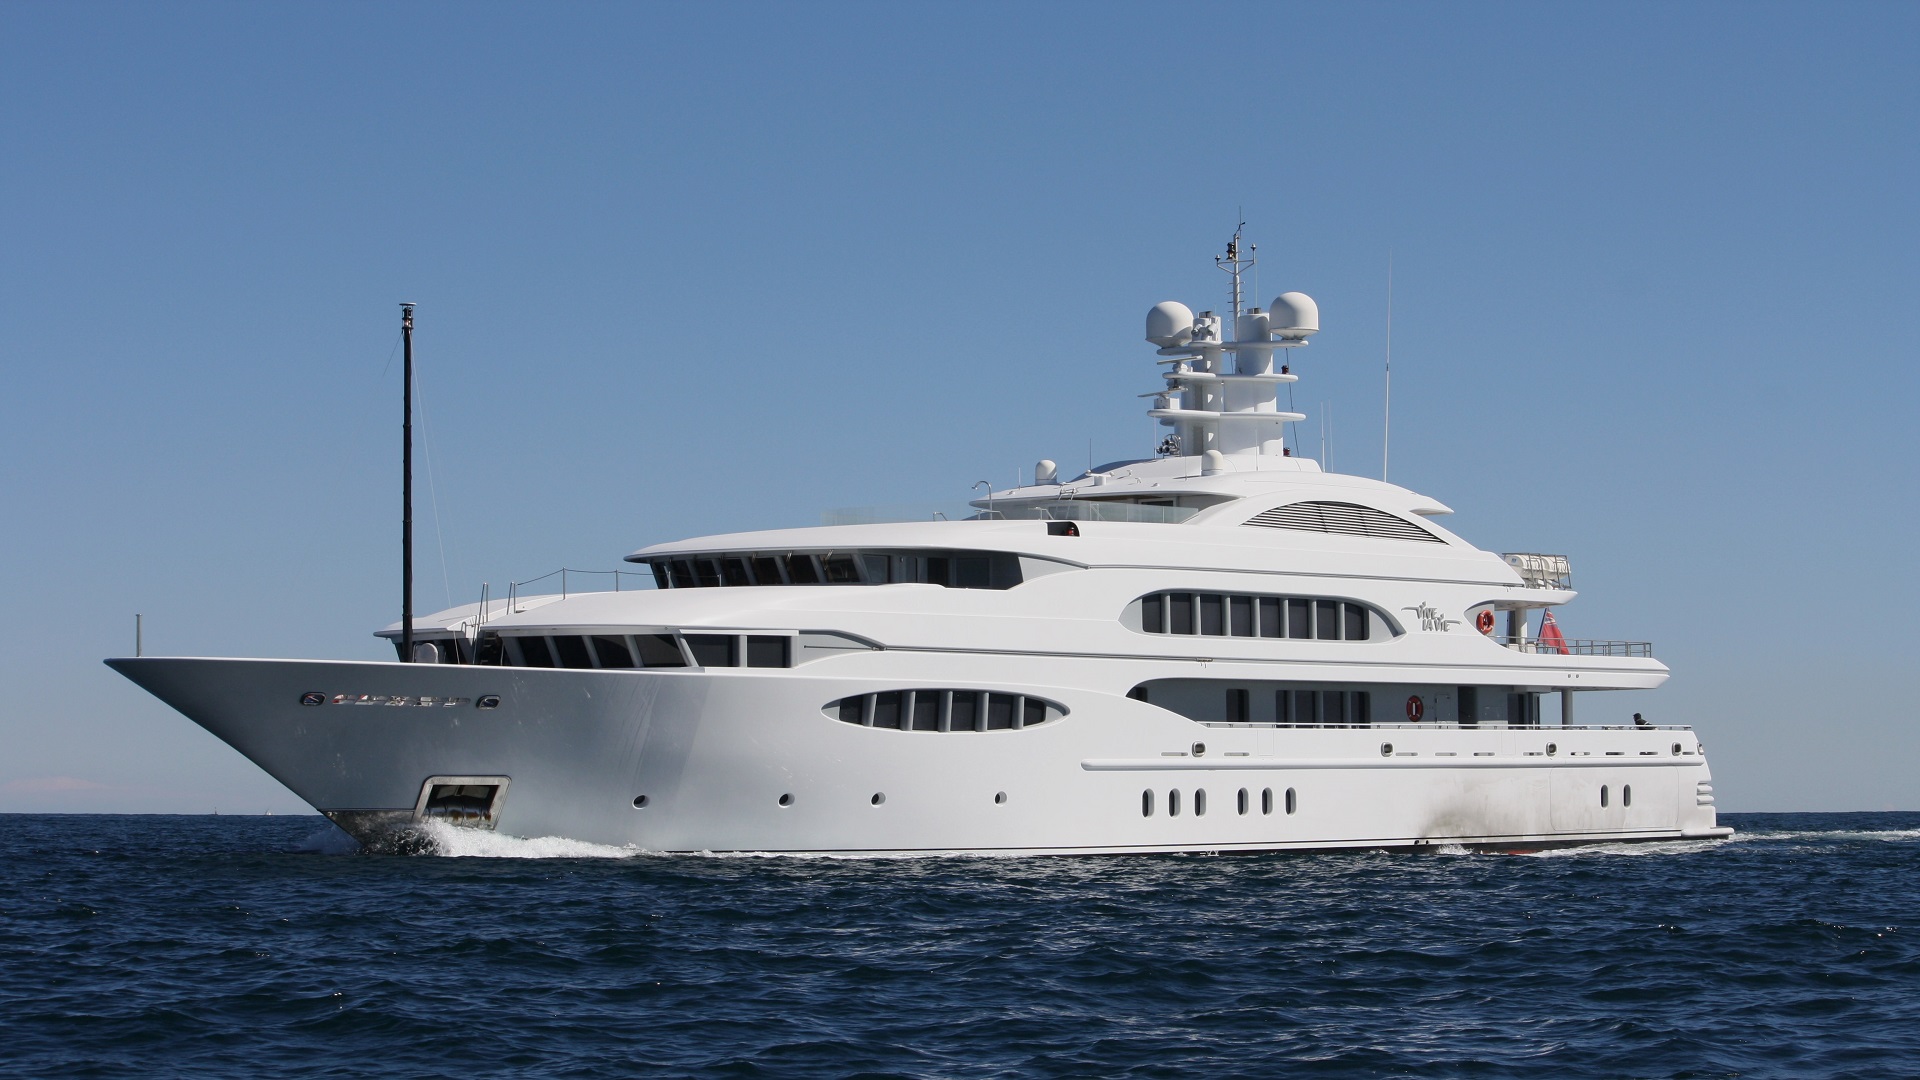 who owns vive la vie yacht